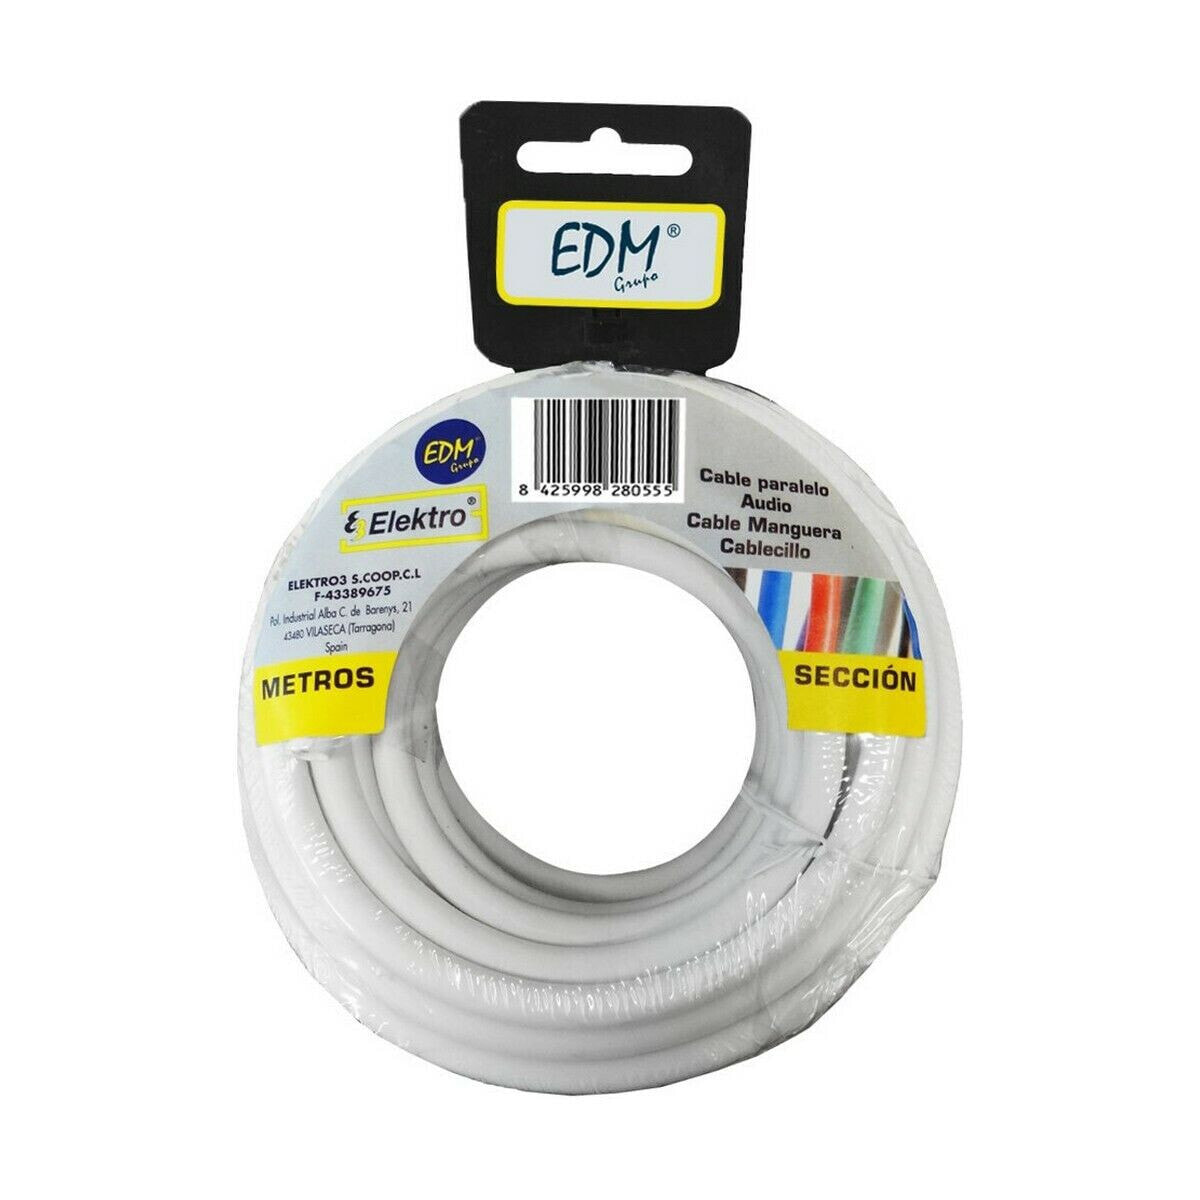 Cable EDM 2 x 2,5 mm White 15 m